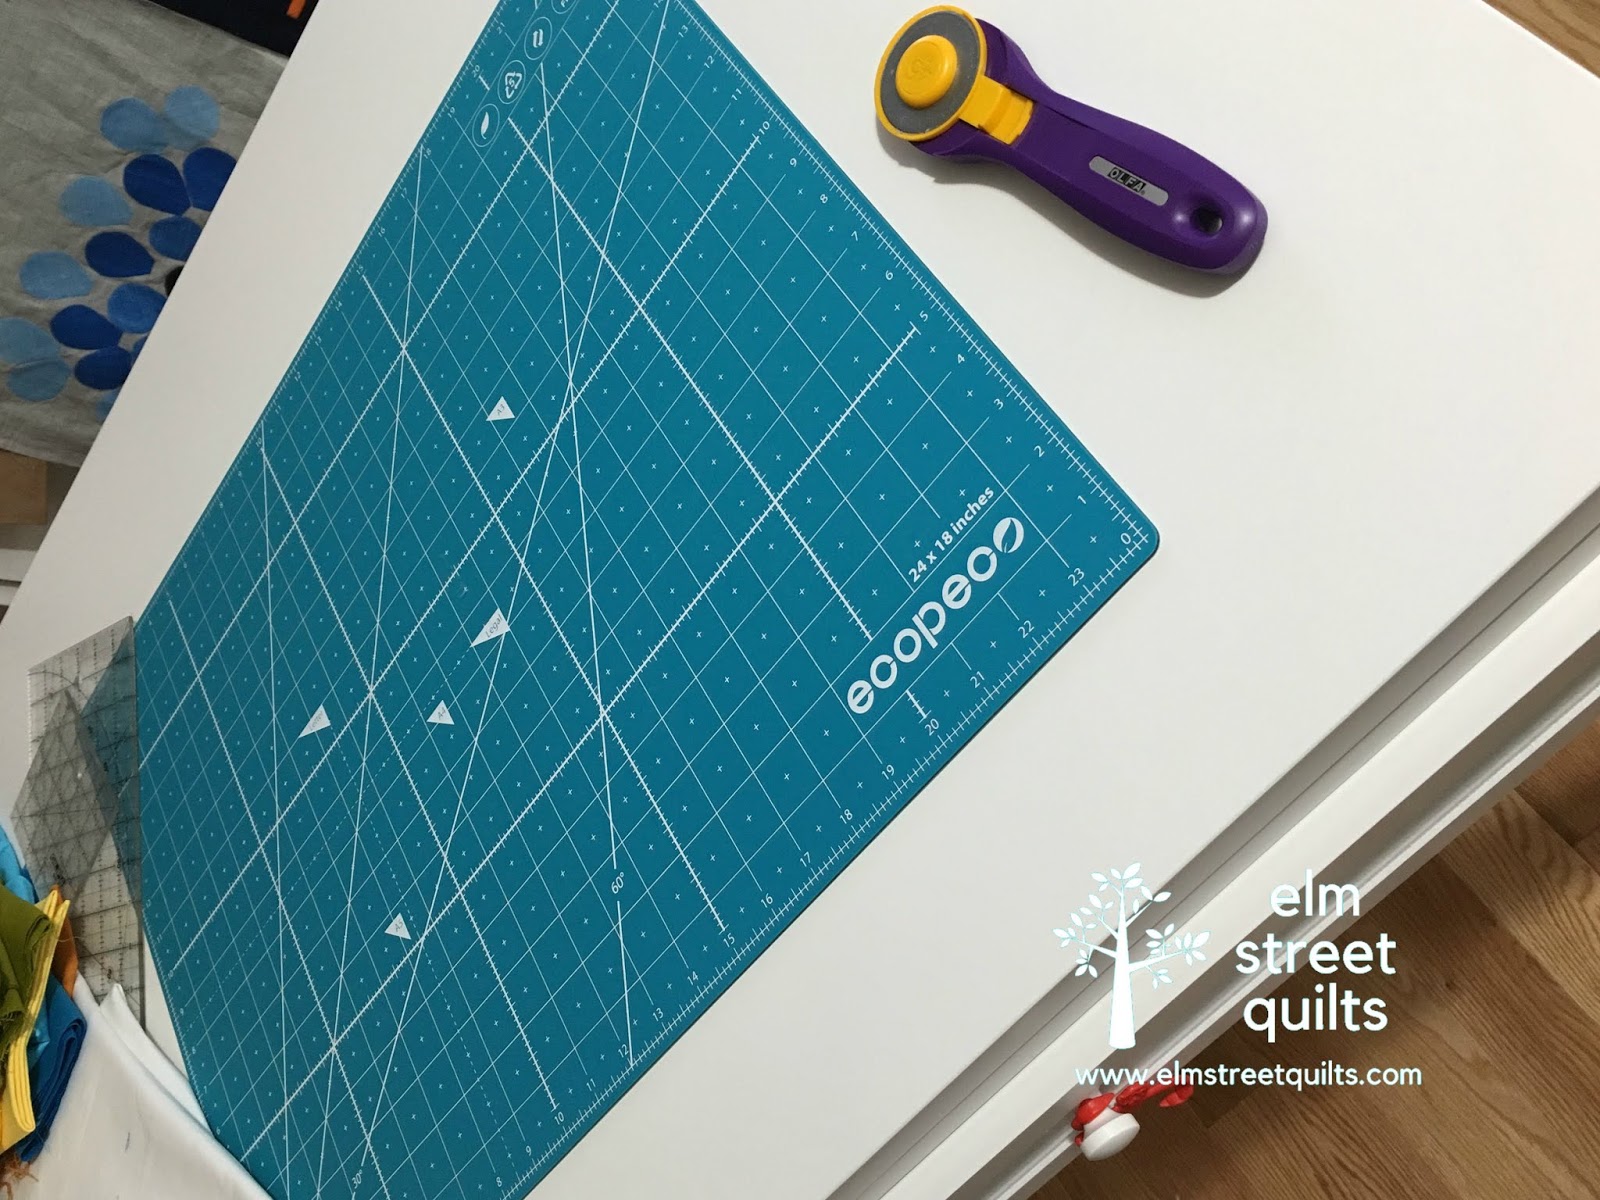 A3 A4 A5 PVC Cutting Mat Workbench Patchwork Sewing Manual DIY